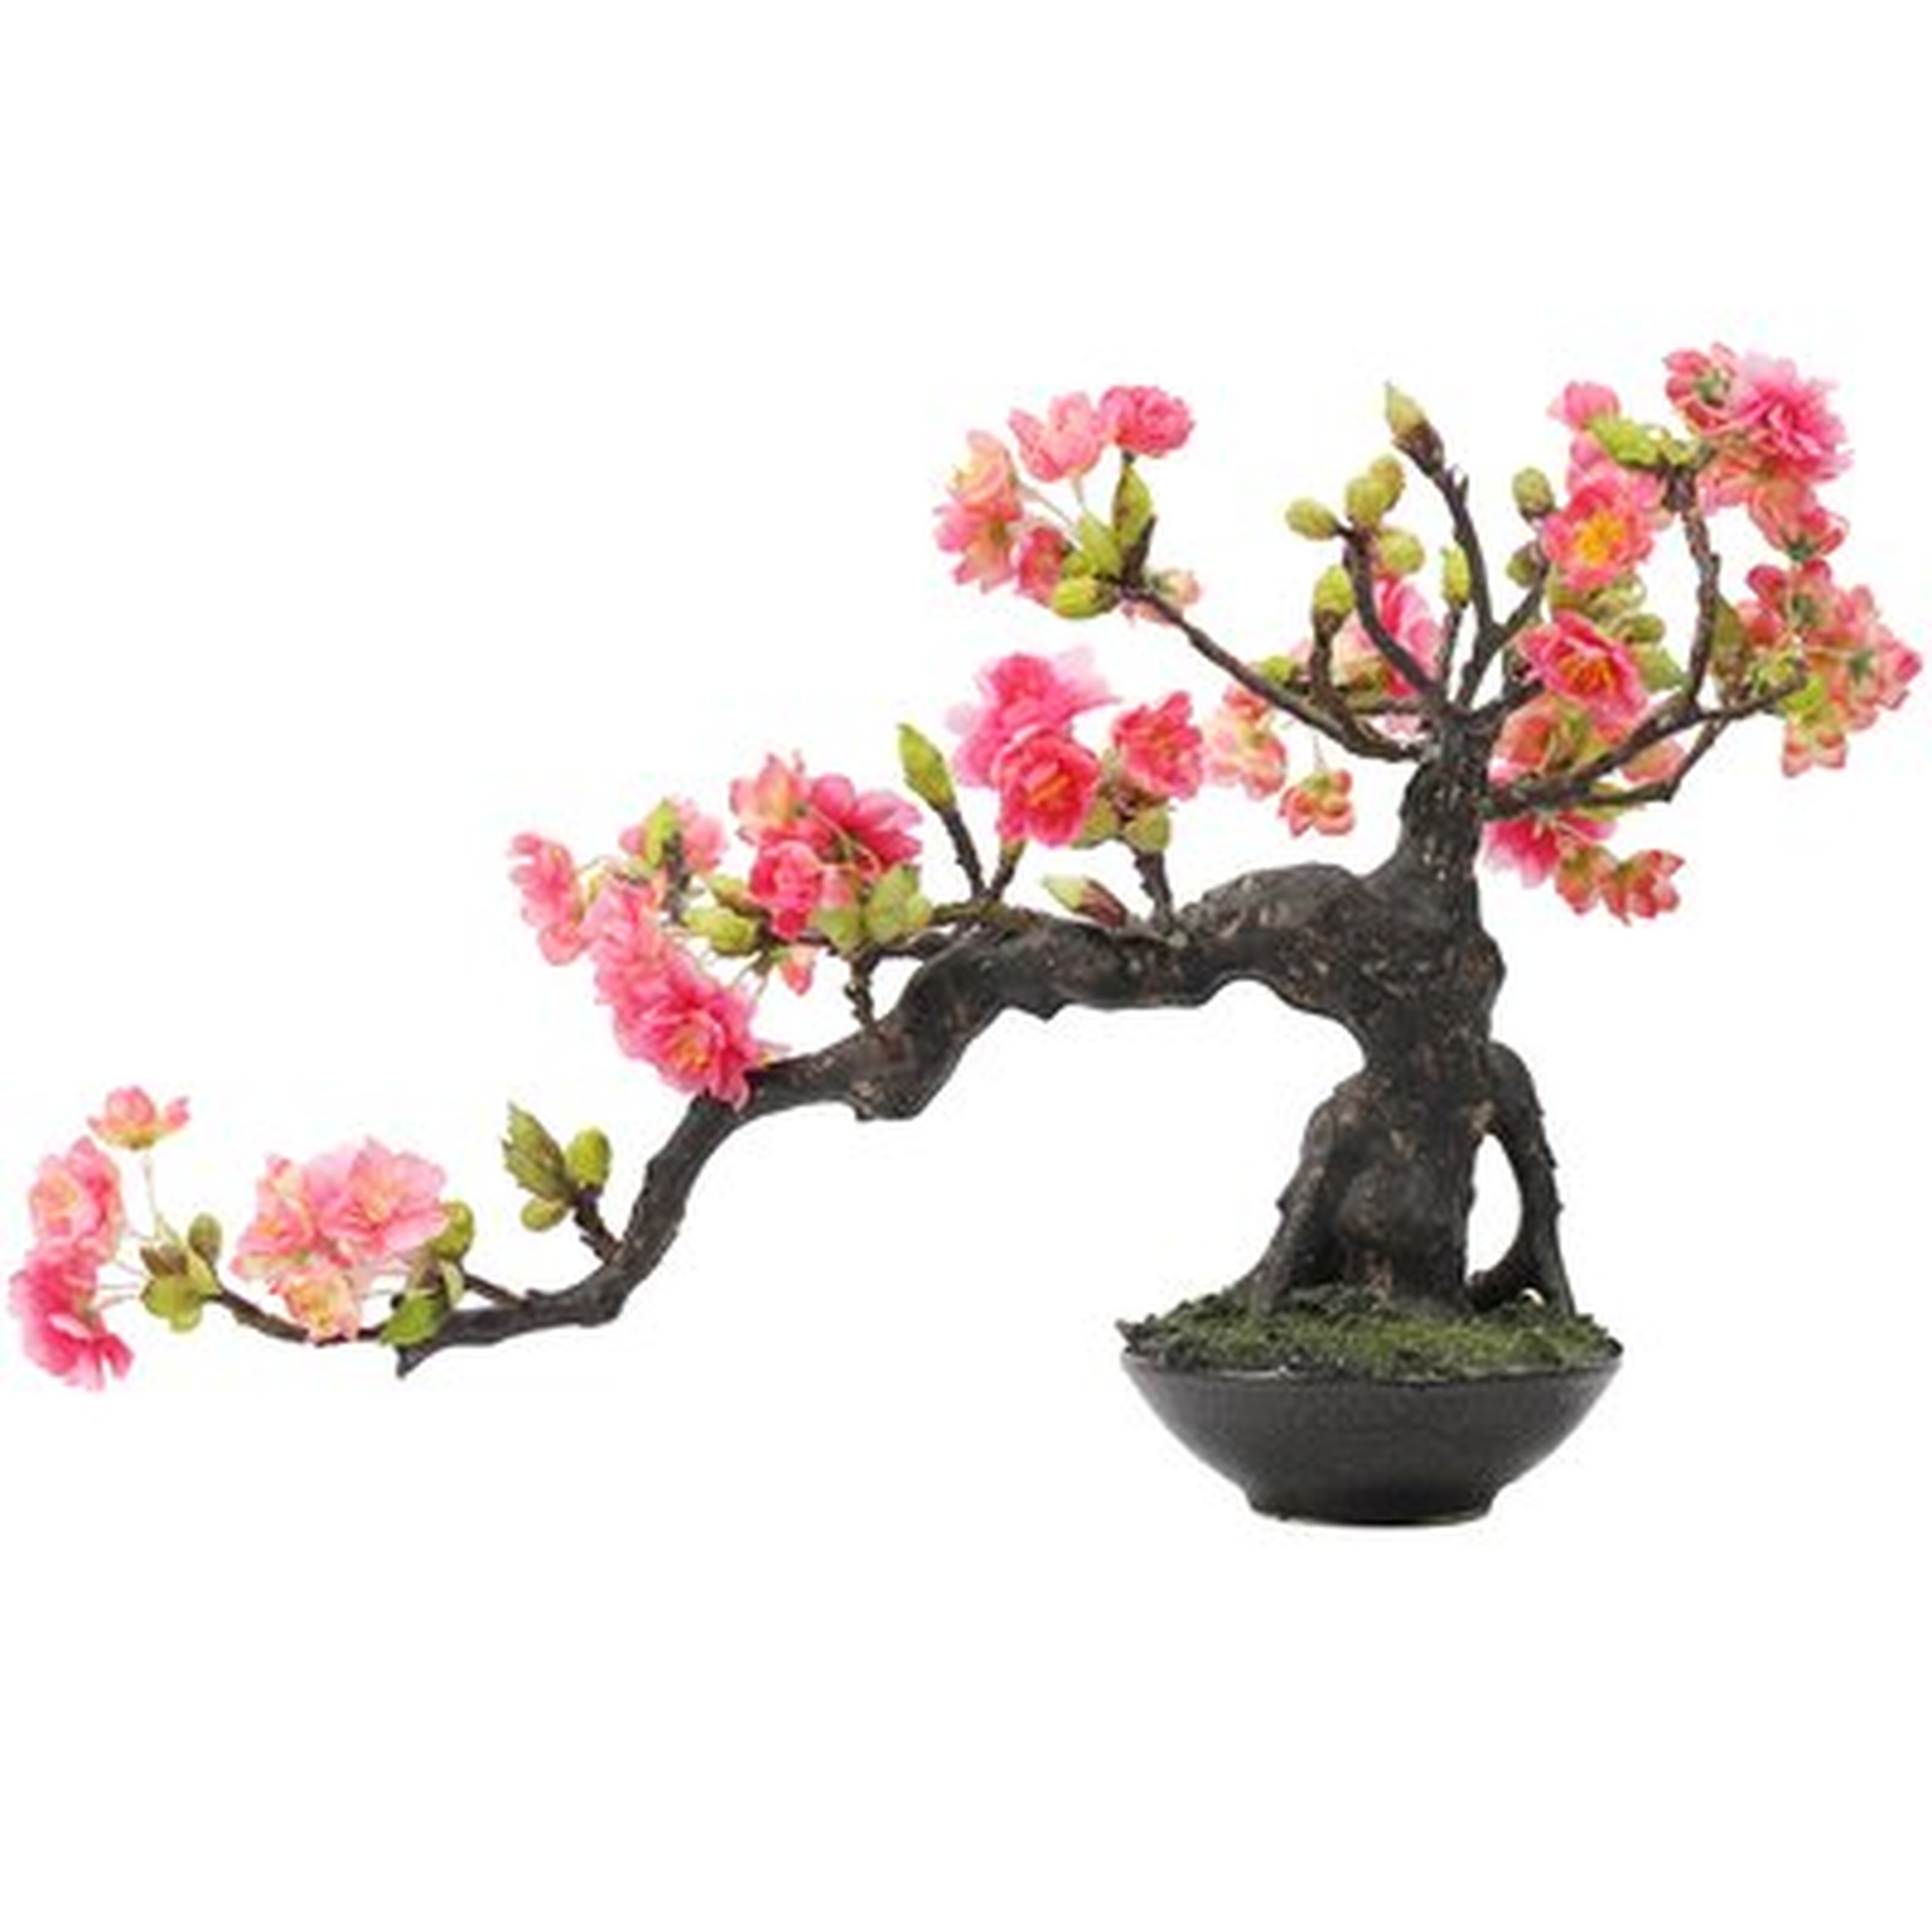 Flowering Cherry Blossom Bonsai Tree in Pot - Wayfair